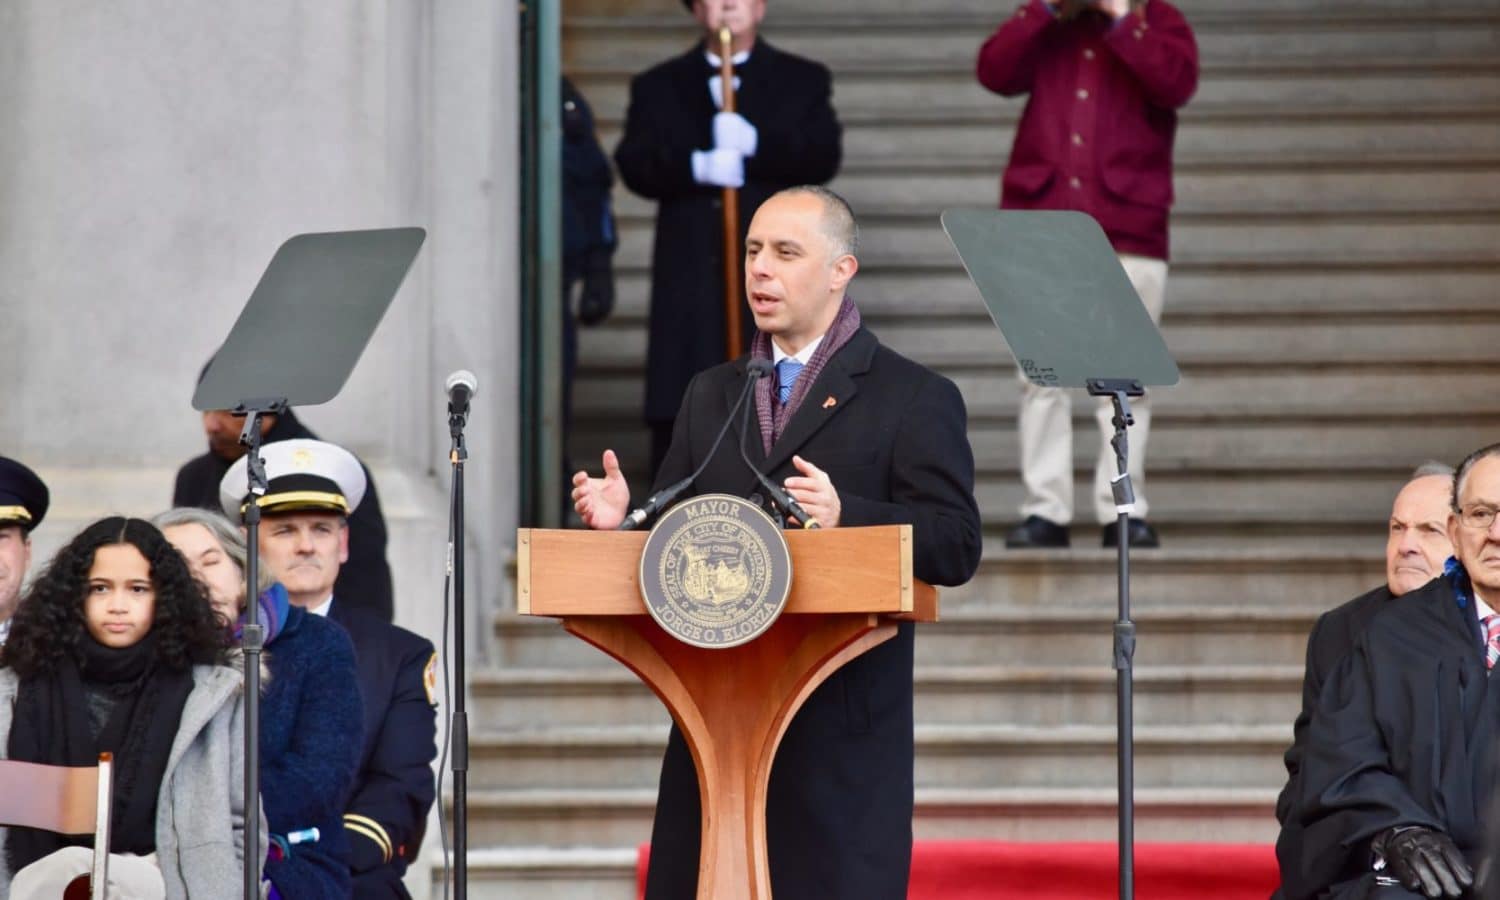 Rhode Island News: Providence Mayor Jorge Elorza’s second inauguration address